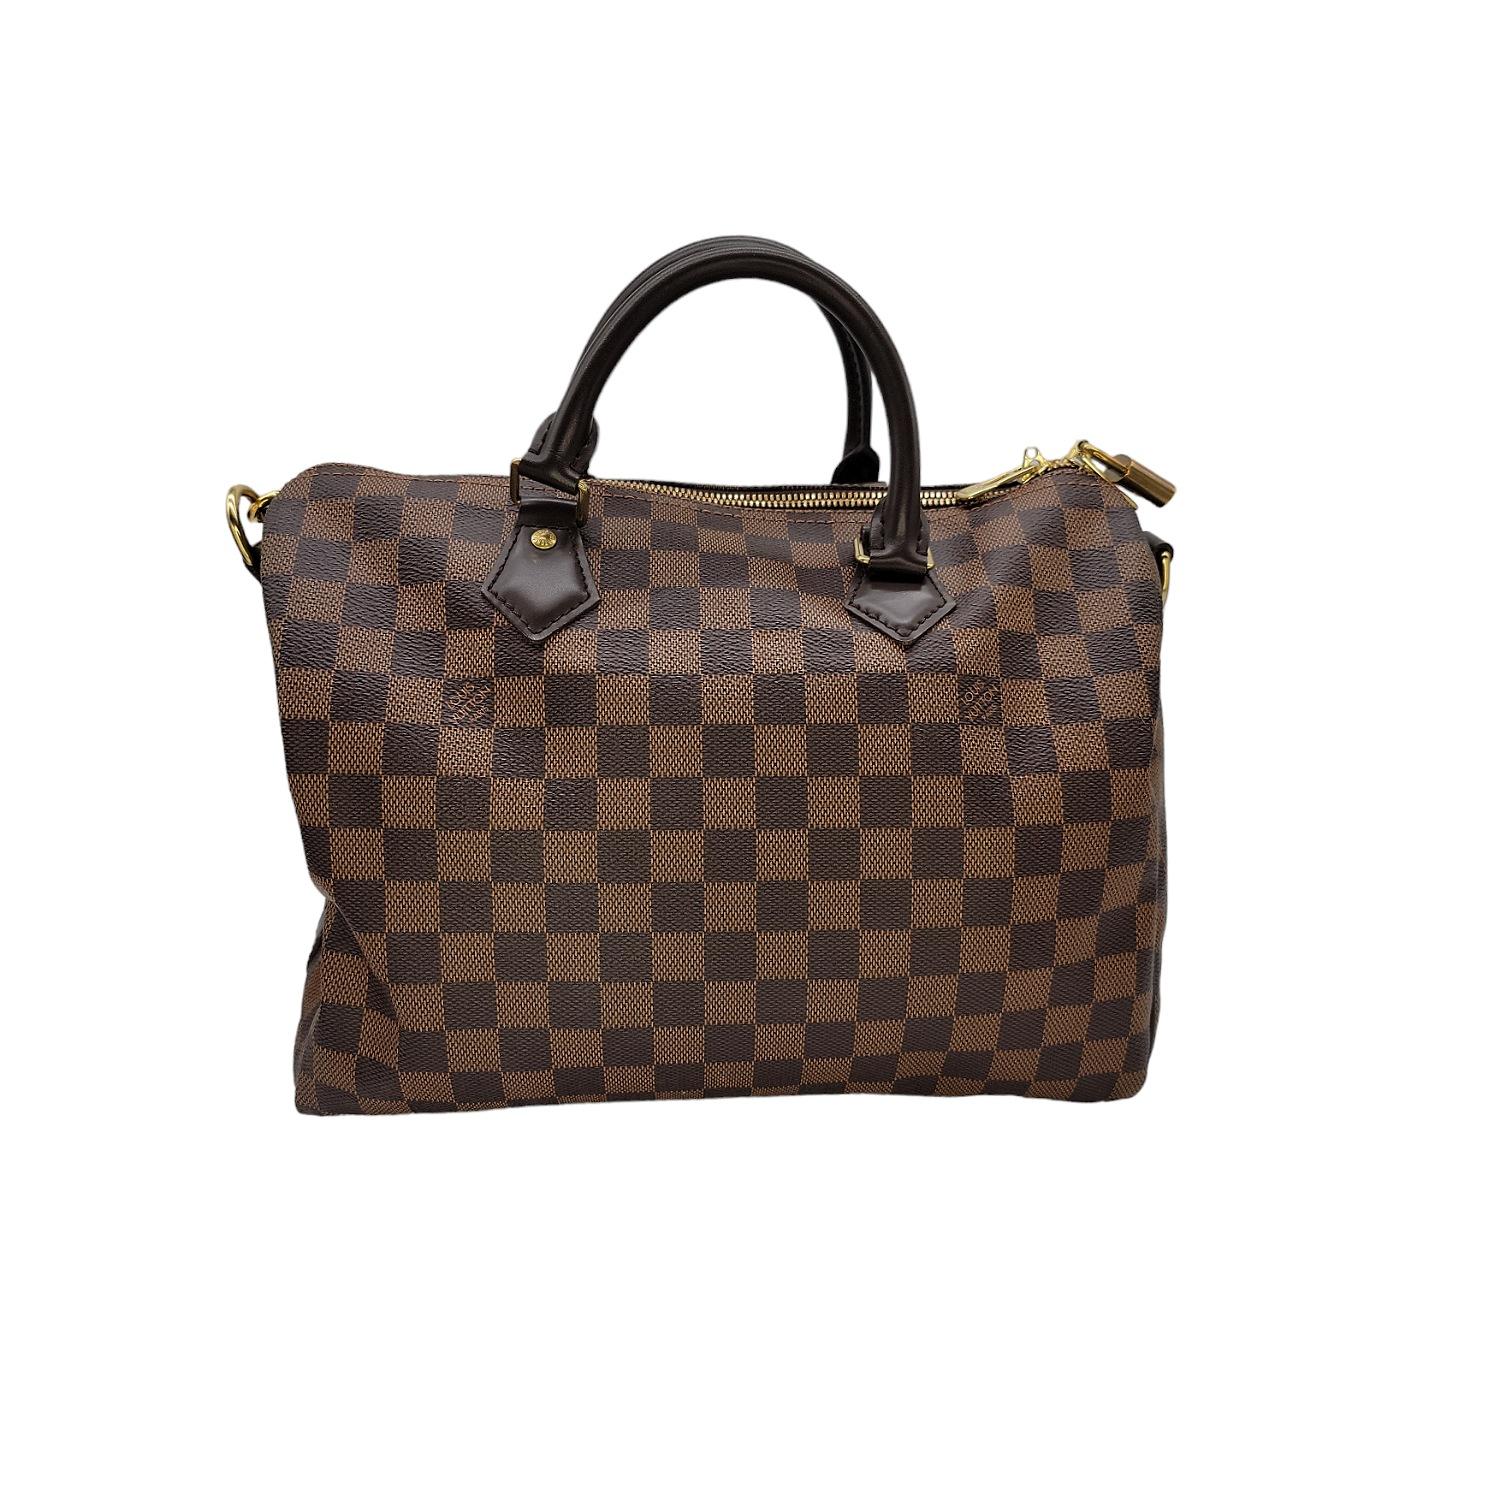 Louis Vuitton Damier Ebene Speedy Bandouliere 30 Bag In Good Condition For Sale In Scottsdale, AZ